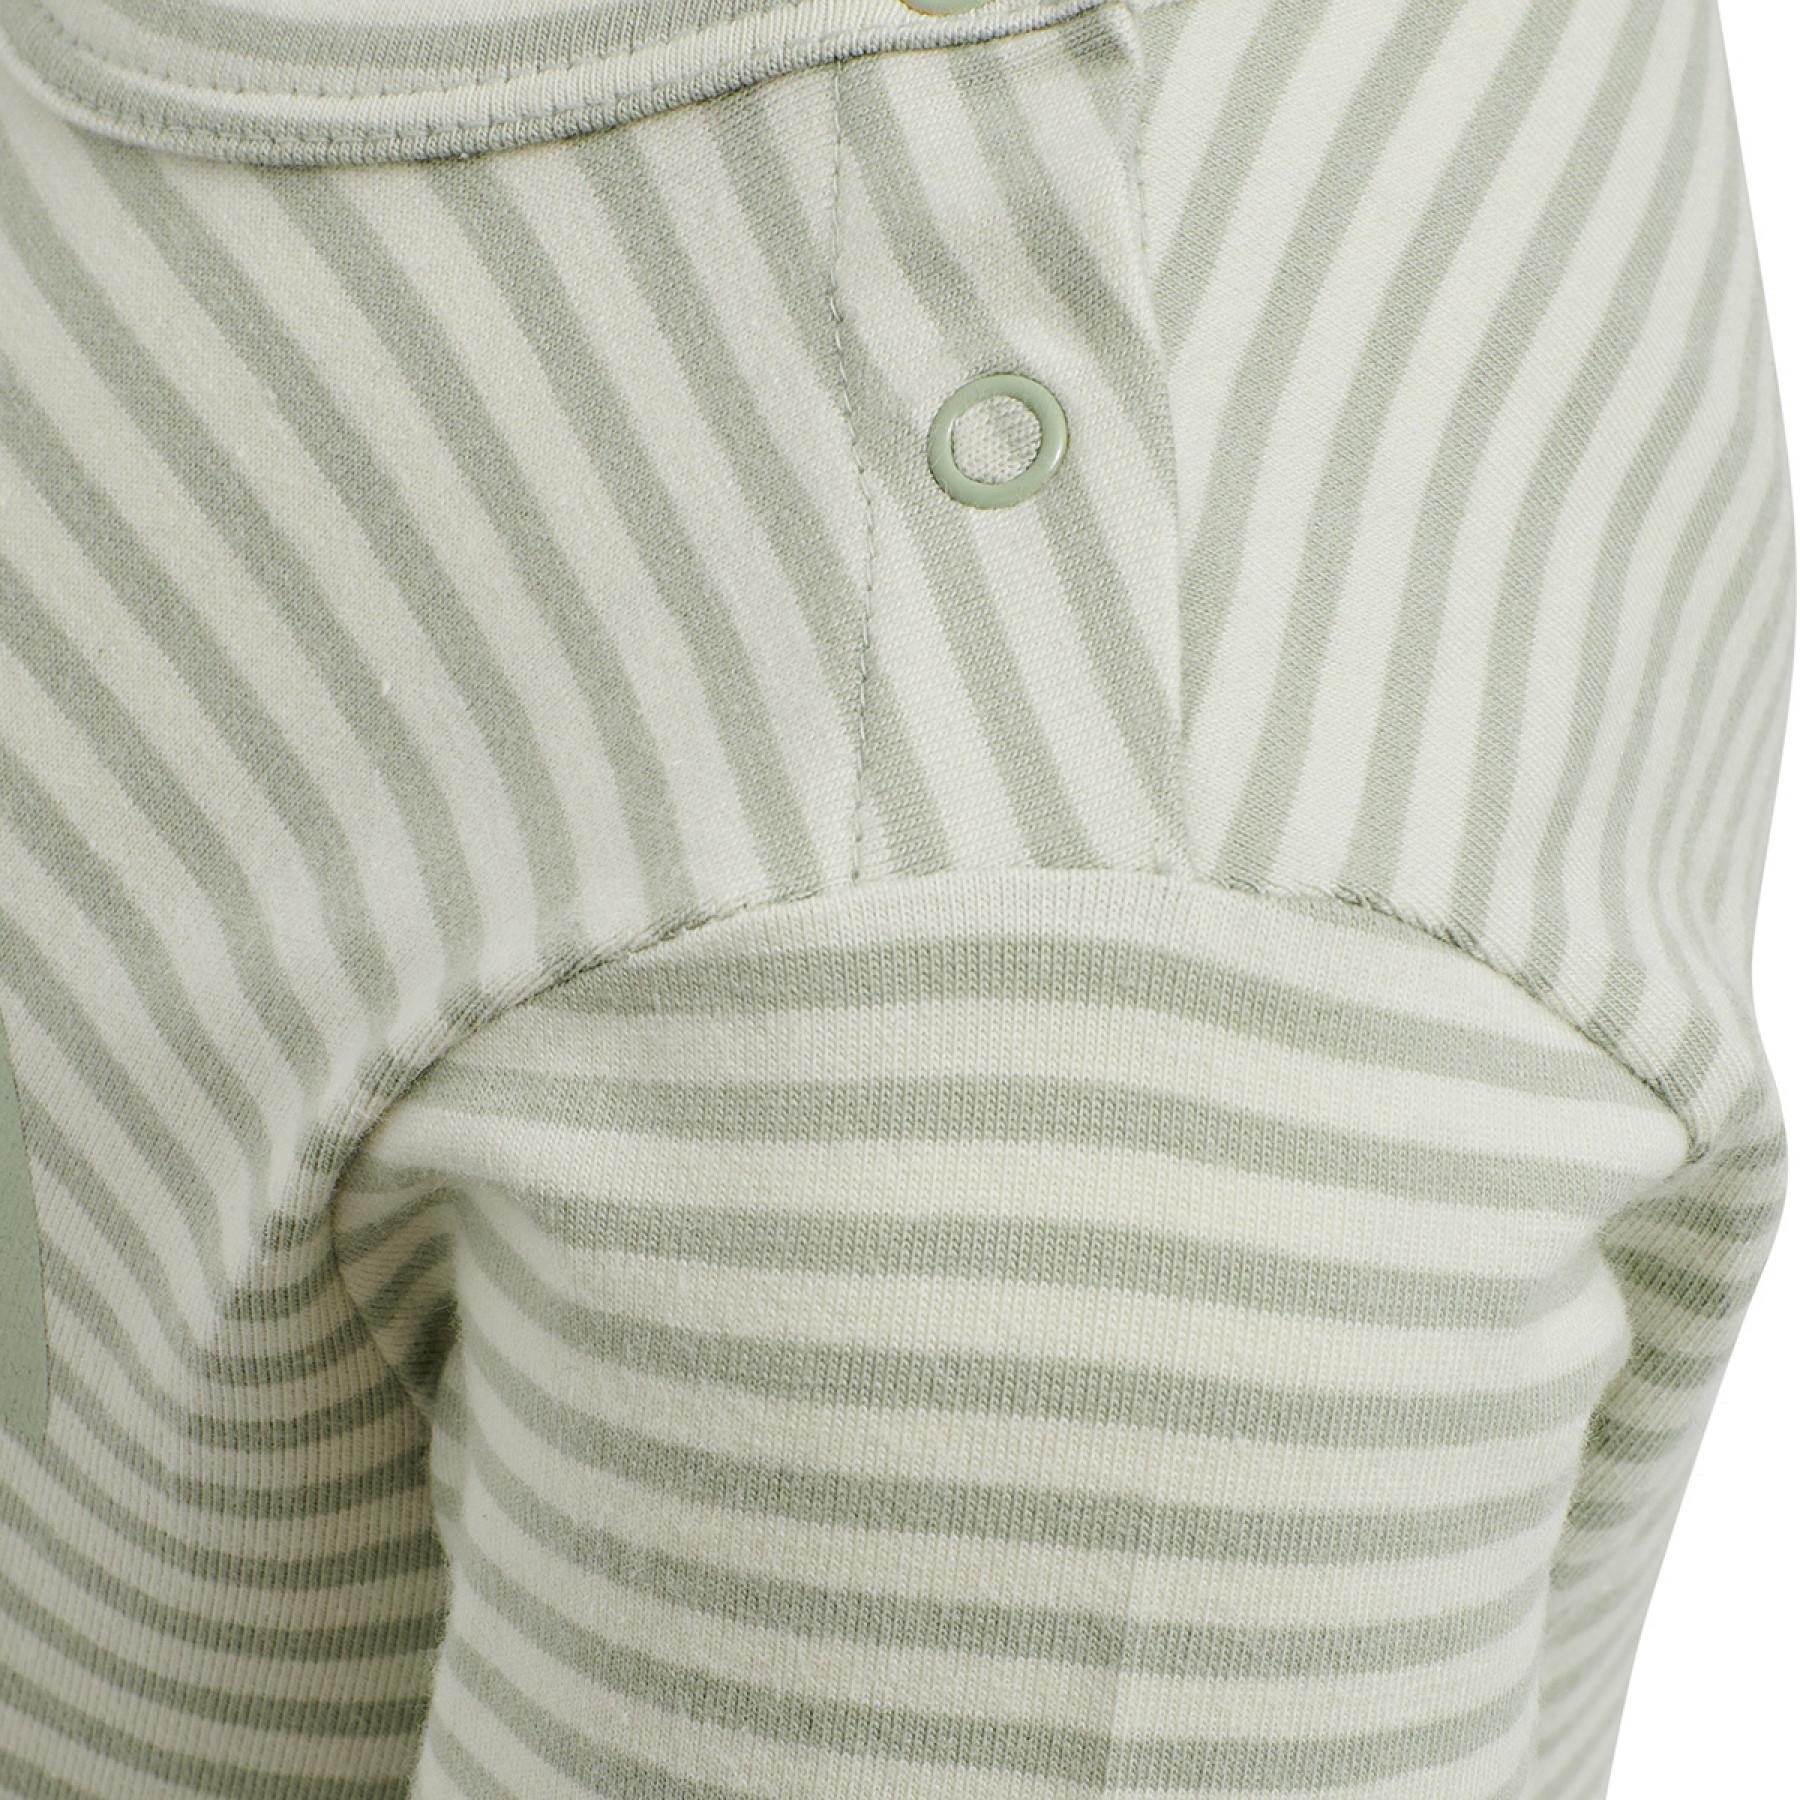 Långärmad bodysuit för baby Hummel hmlloui